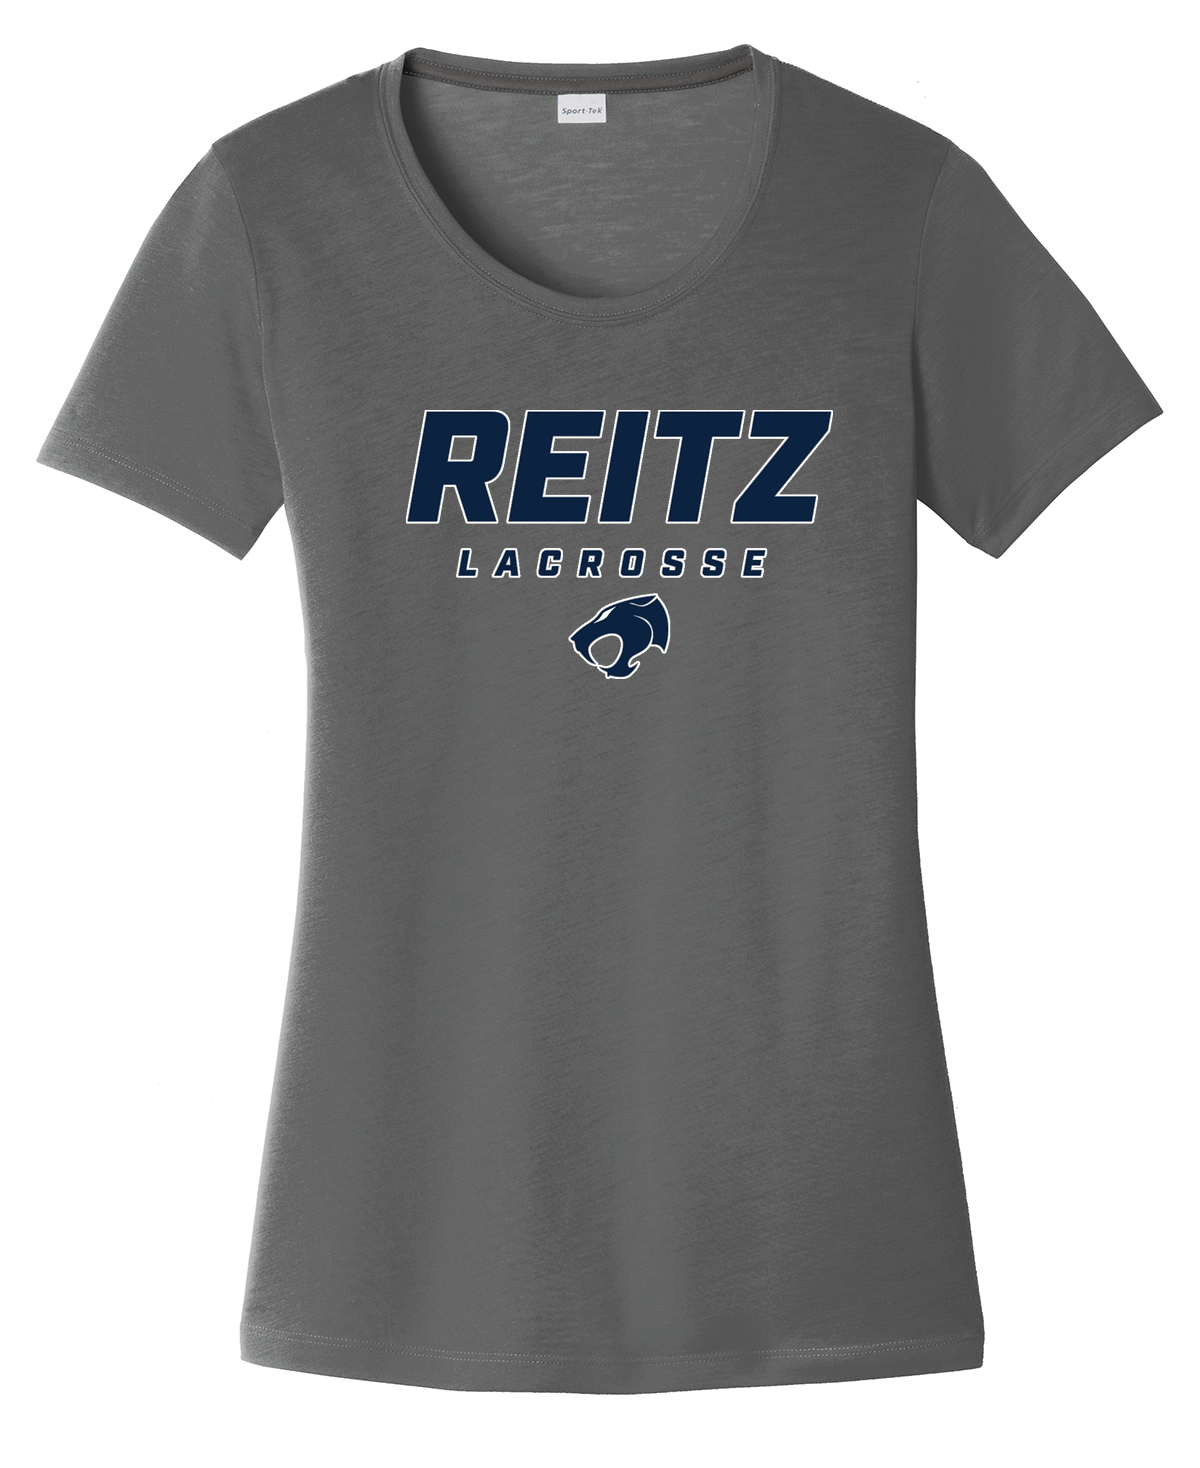 Reitz Lacrosse Women's Dark Grey CottonTouch Performance T-Shirt